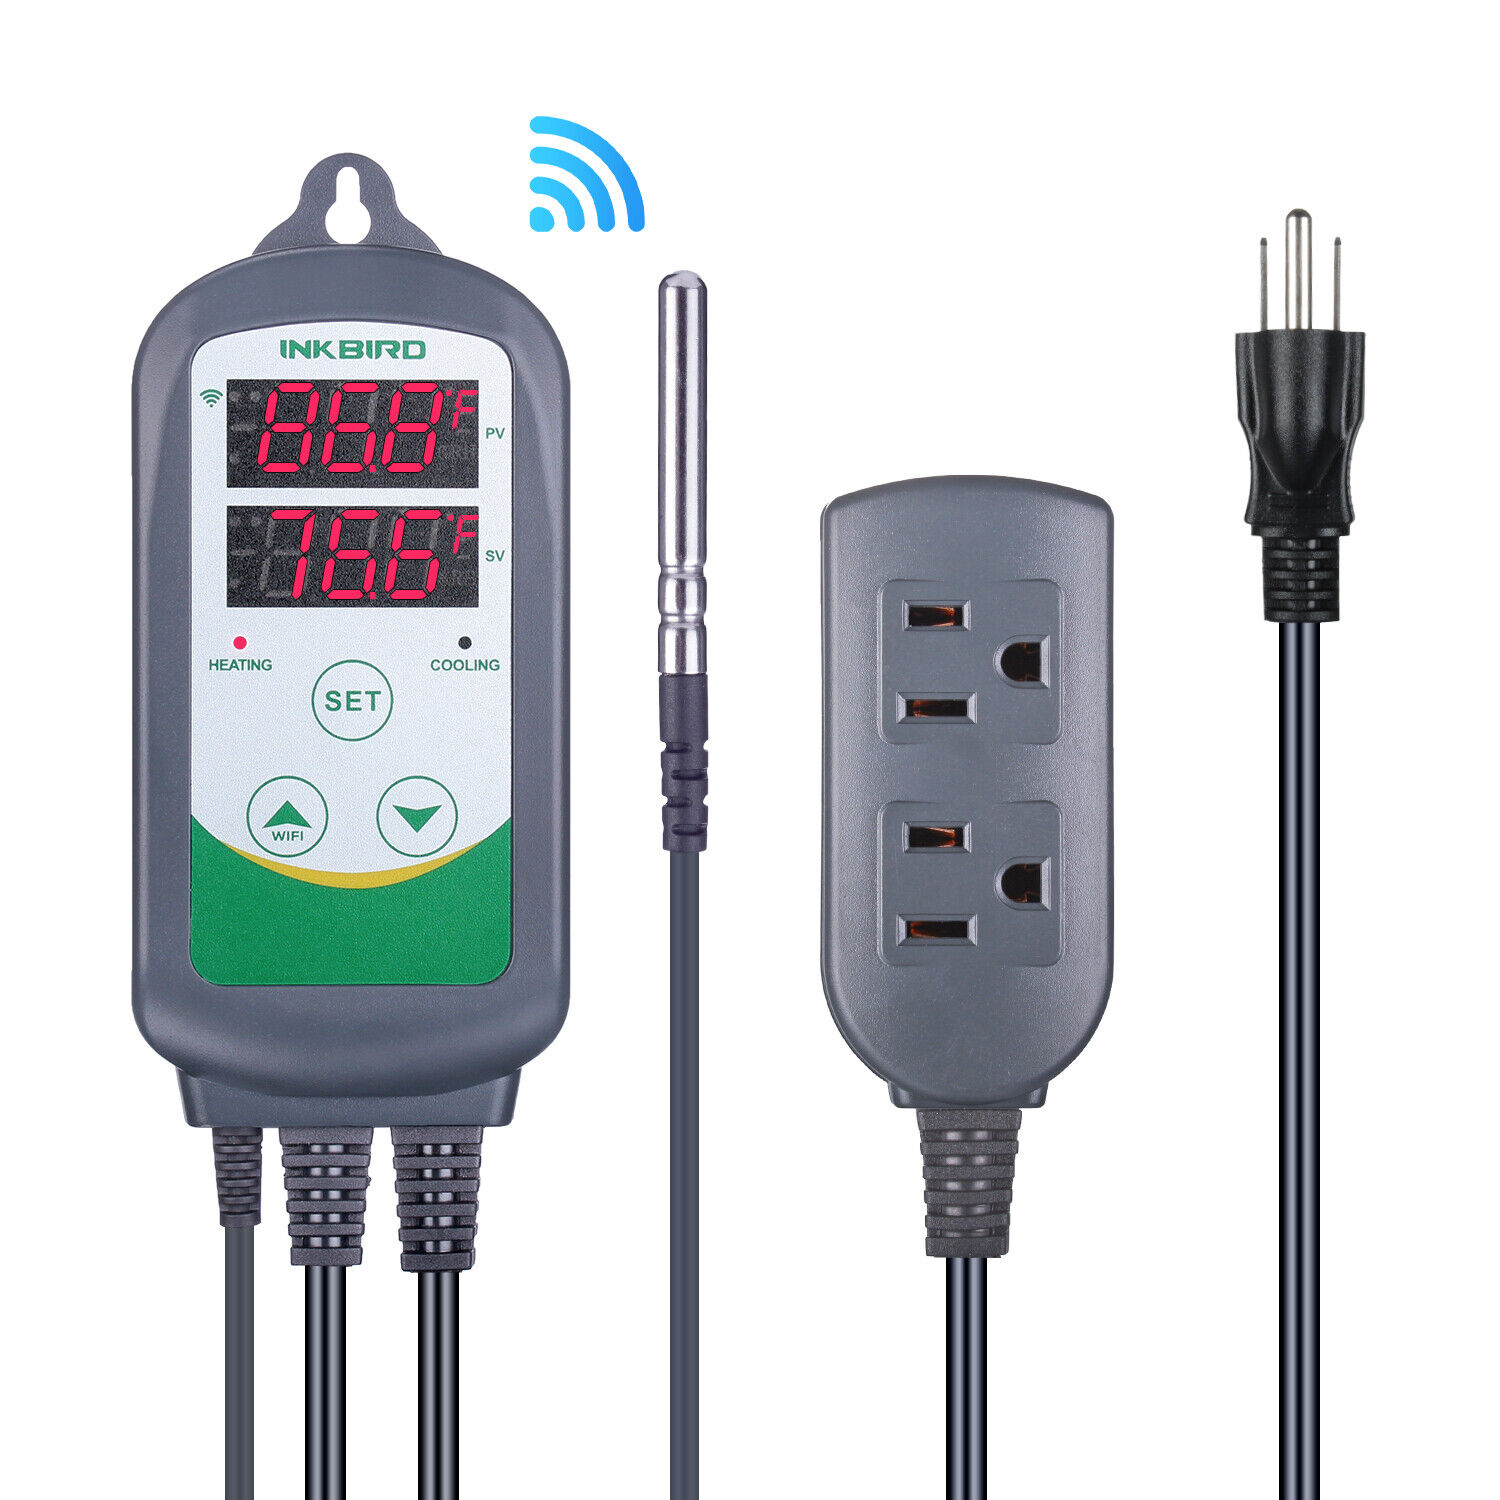 Inkbird 2.4G Wifi Temperature Humidity Controller Thermostat Humidistat US Plug